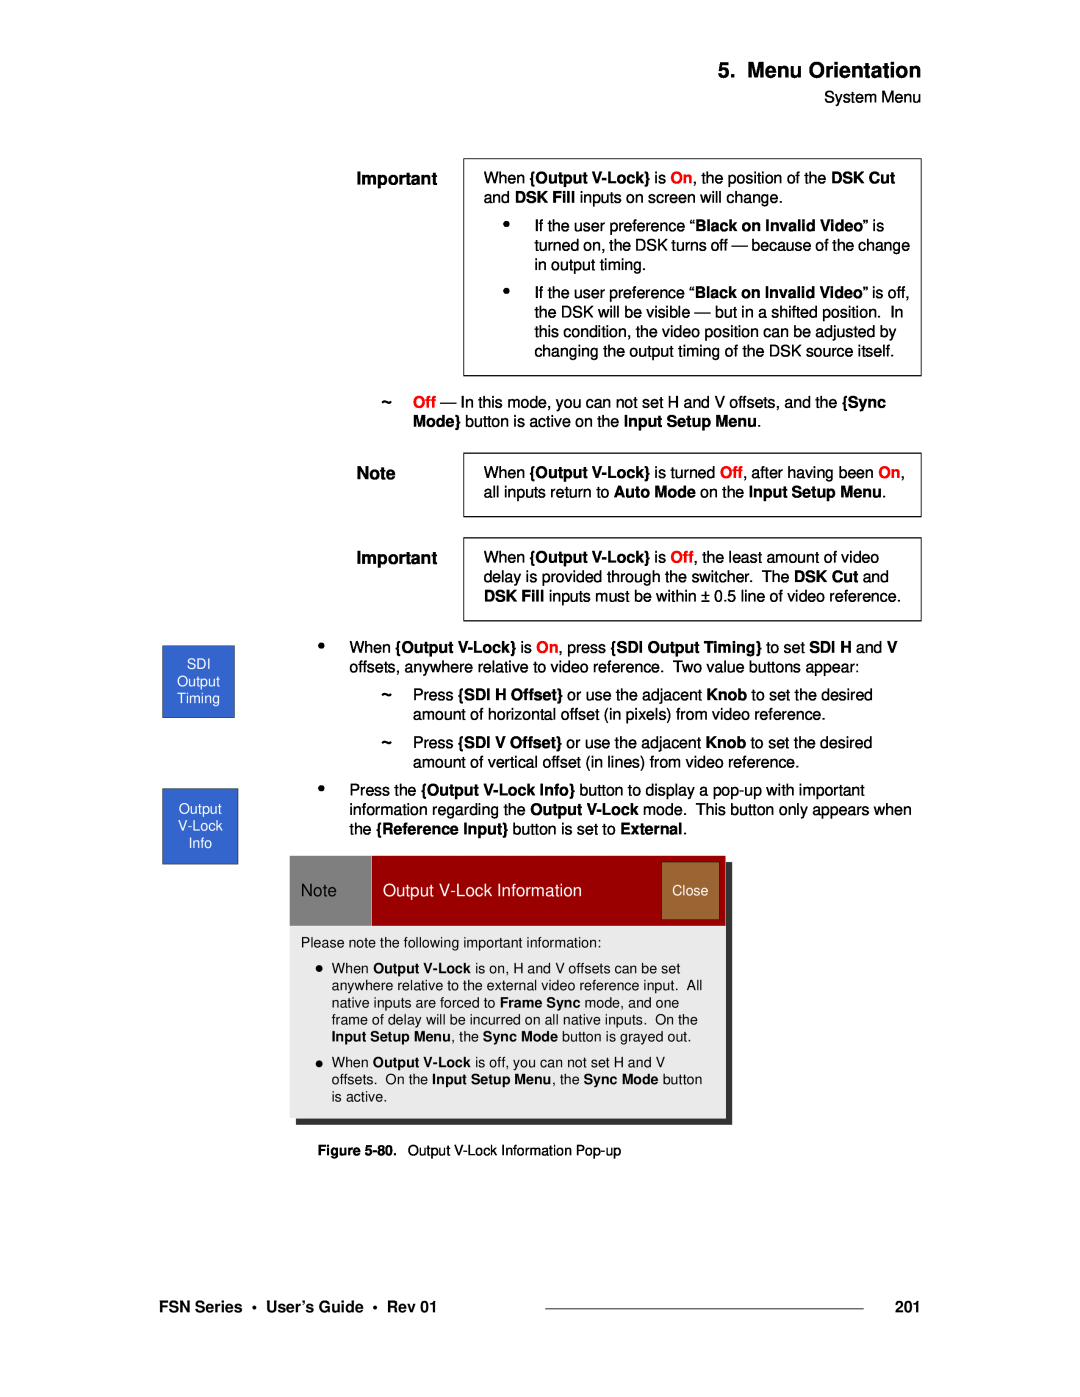 Barco 26-0702000-00 manual Output V-LockInformation, Menu Orientation, FSN Series • User’s Guide • Rev 